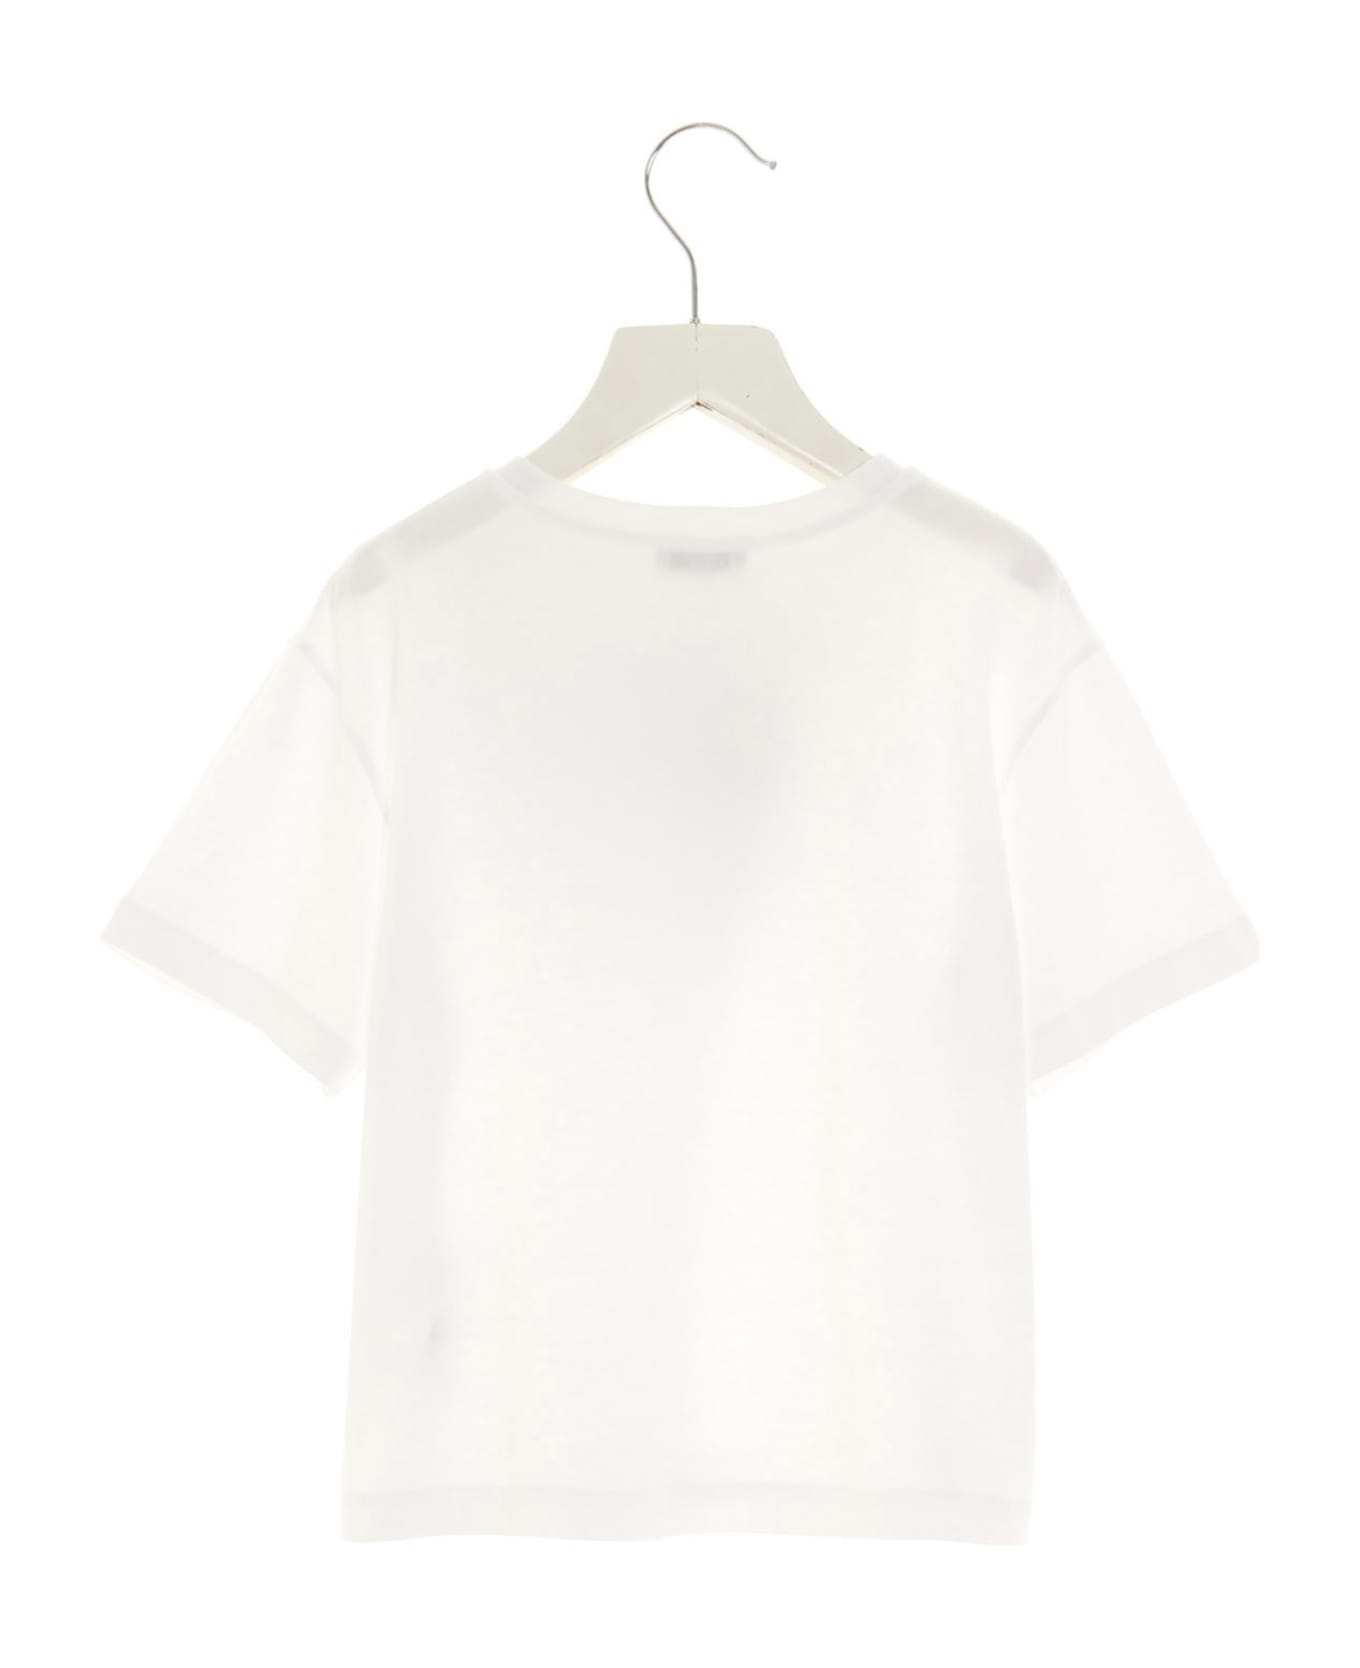 Dolce & Gabbana Crystal Logo T-shirt - White/Black